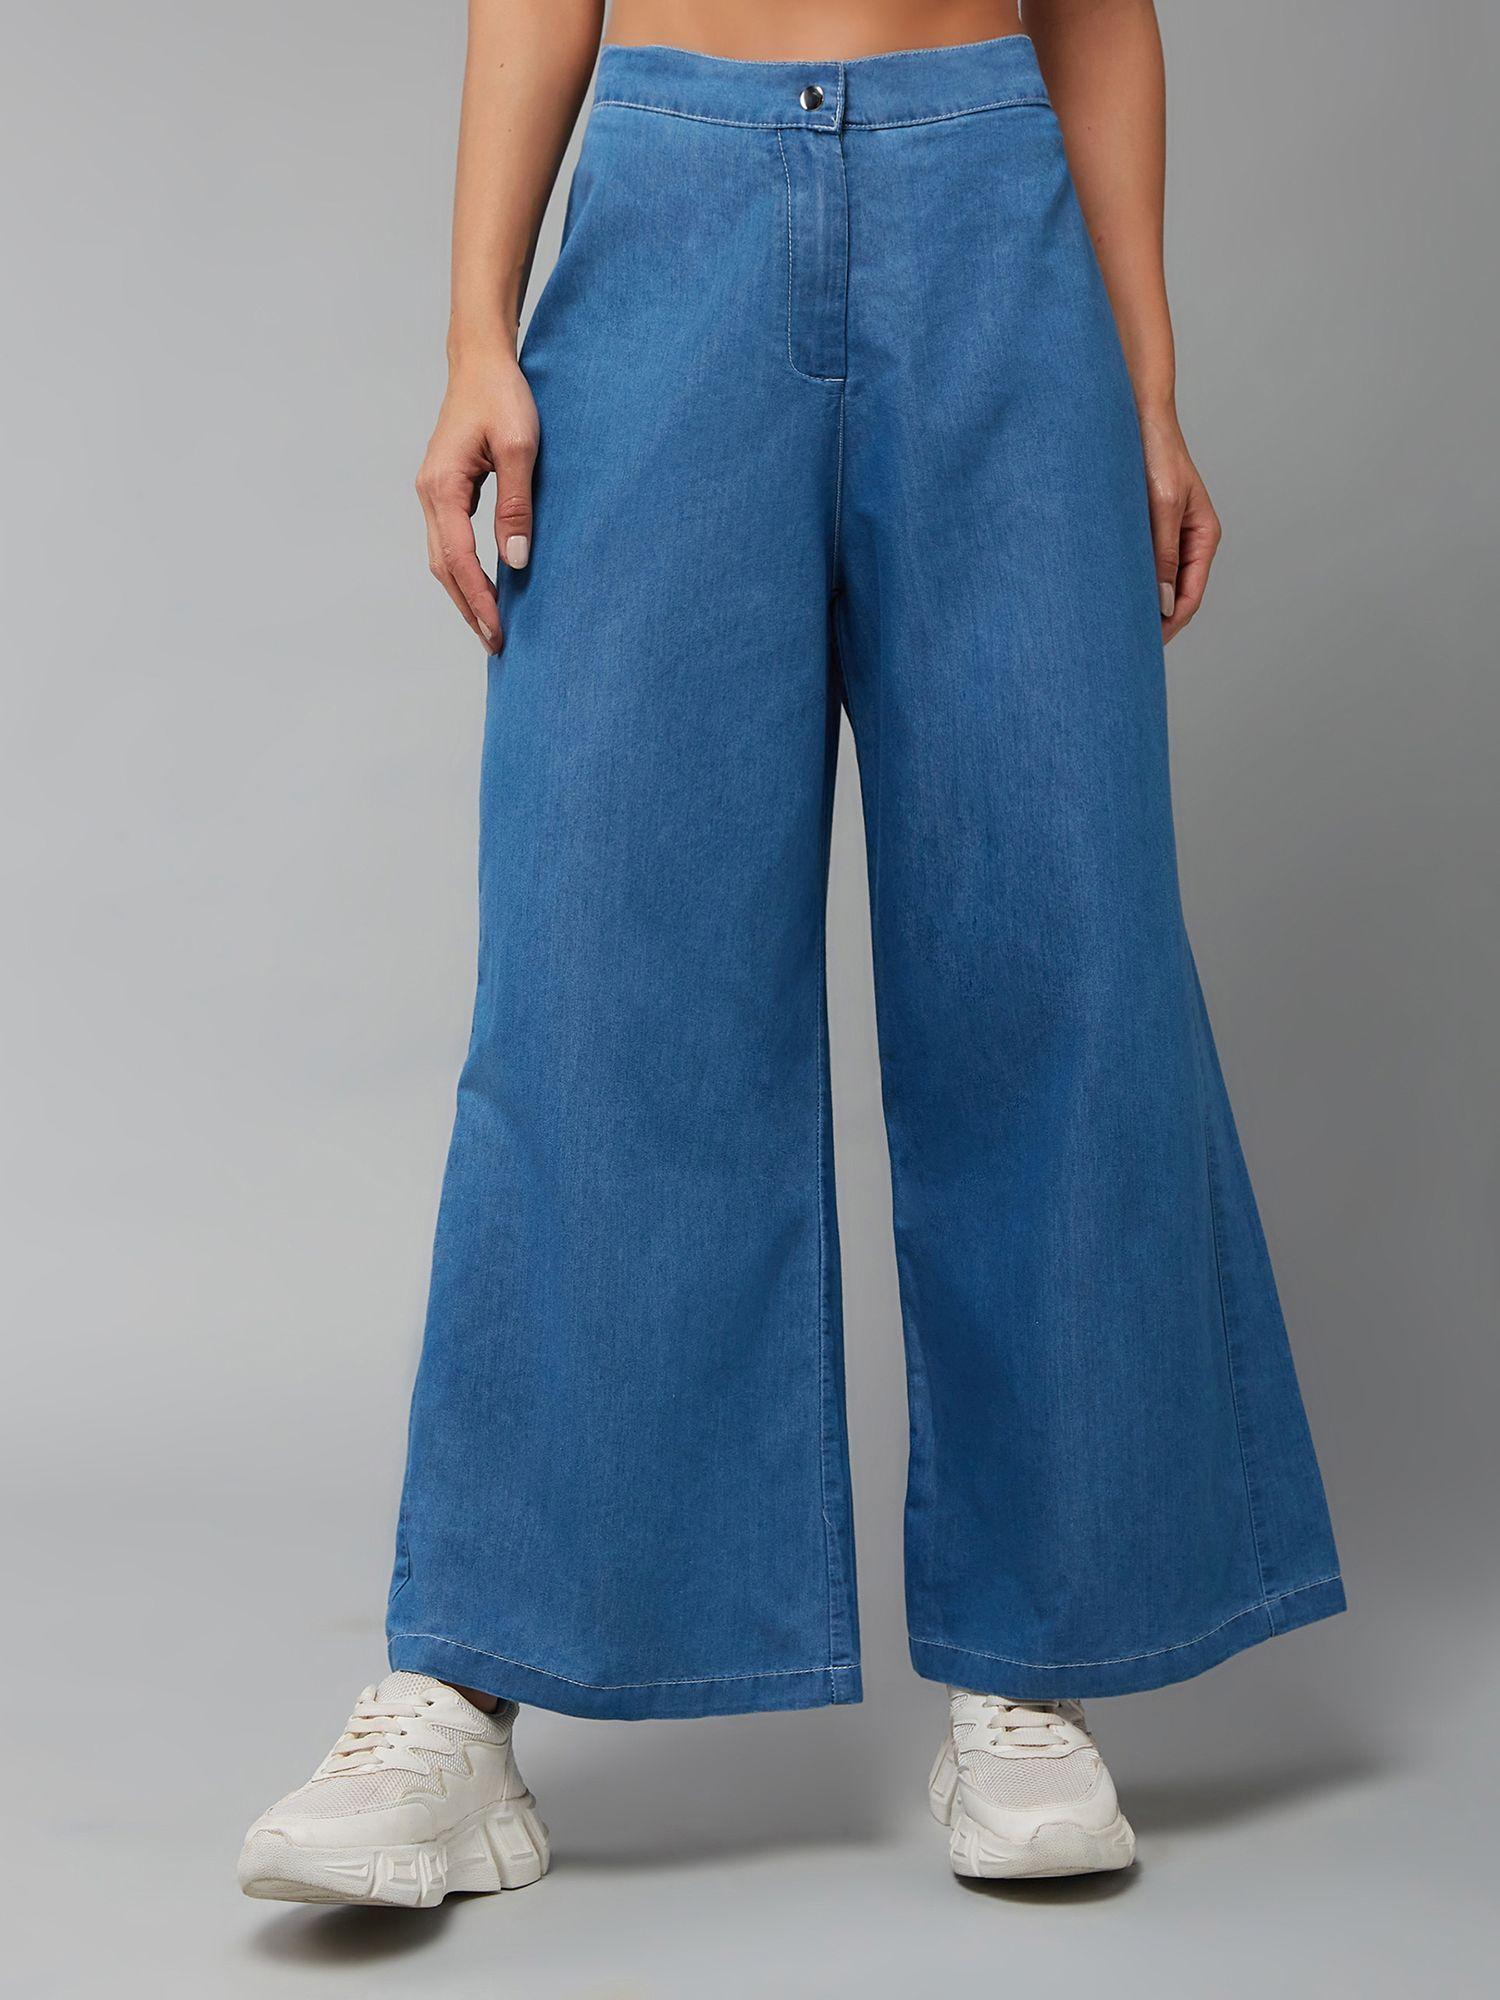 women's blue wide-leg high rise clean look length denim pants